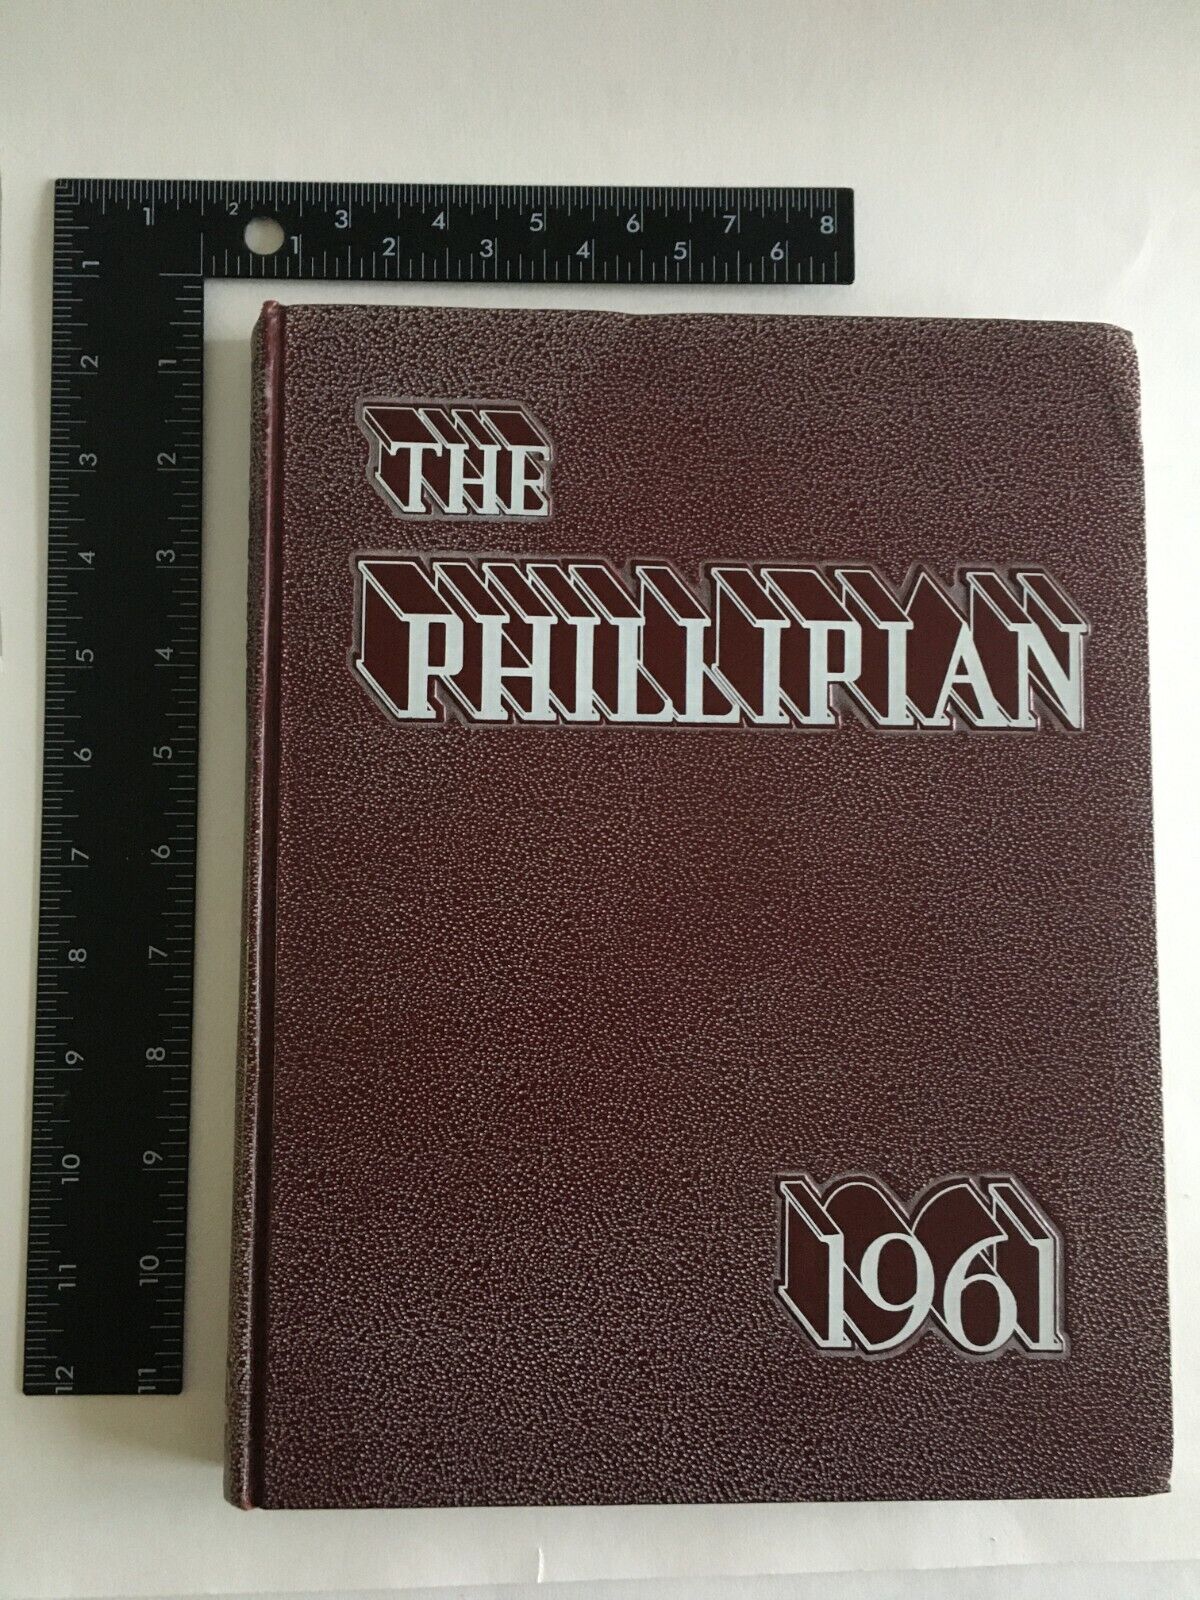 1961 Phillips University Yearbook The Philippian Enid, Oklahoma